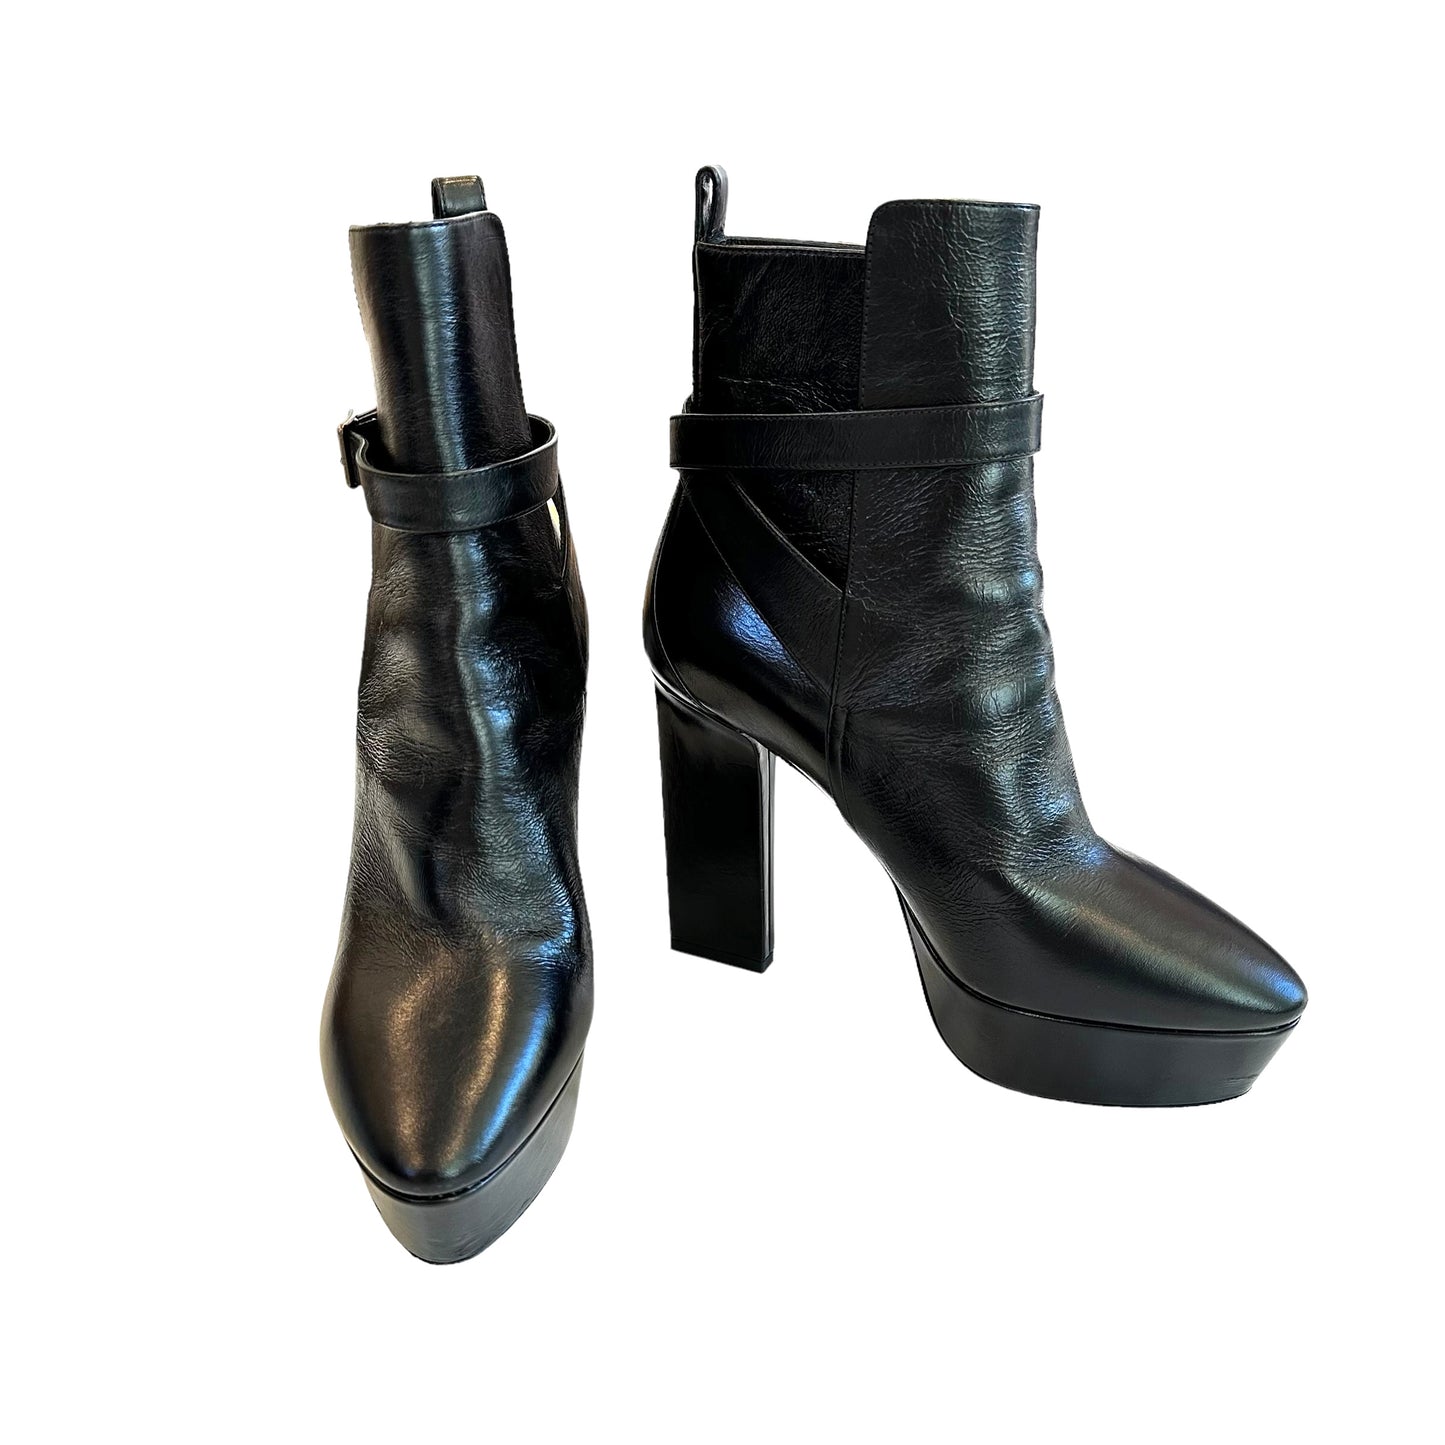 Black Heeled Boots - 6